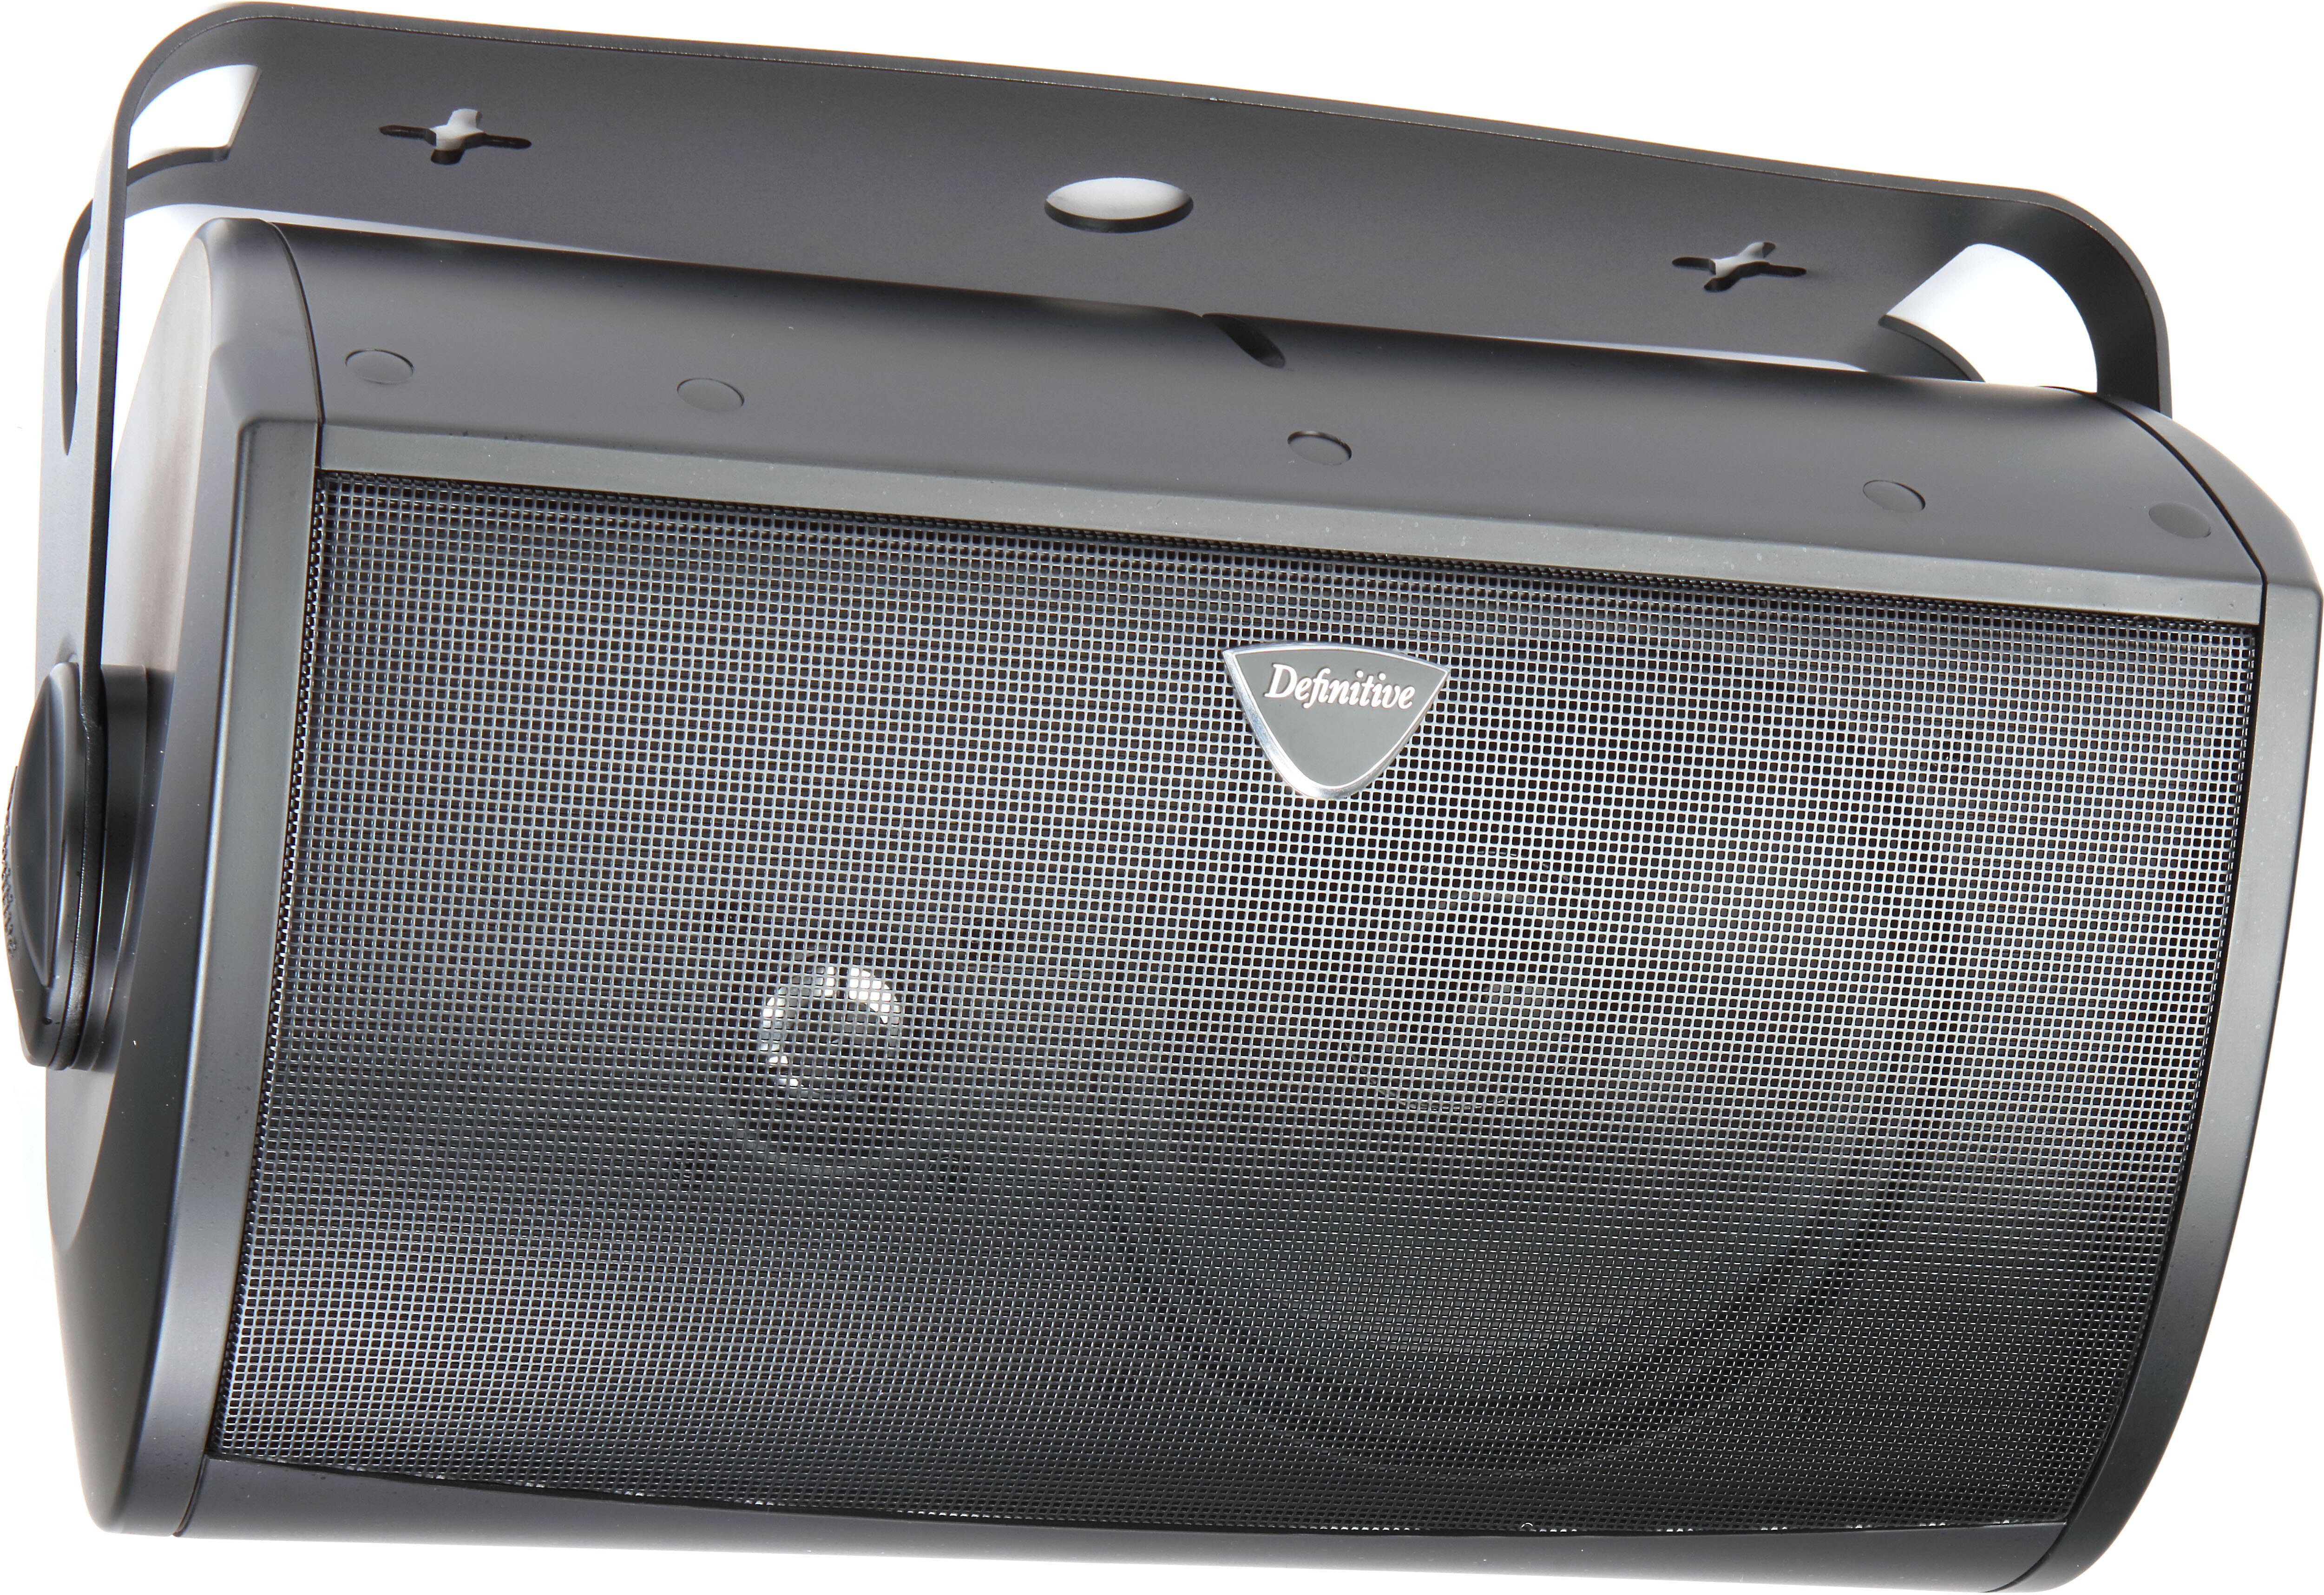 Definitive Technology AW6500 Outdoor 2-Way Speaker - Black